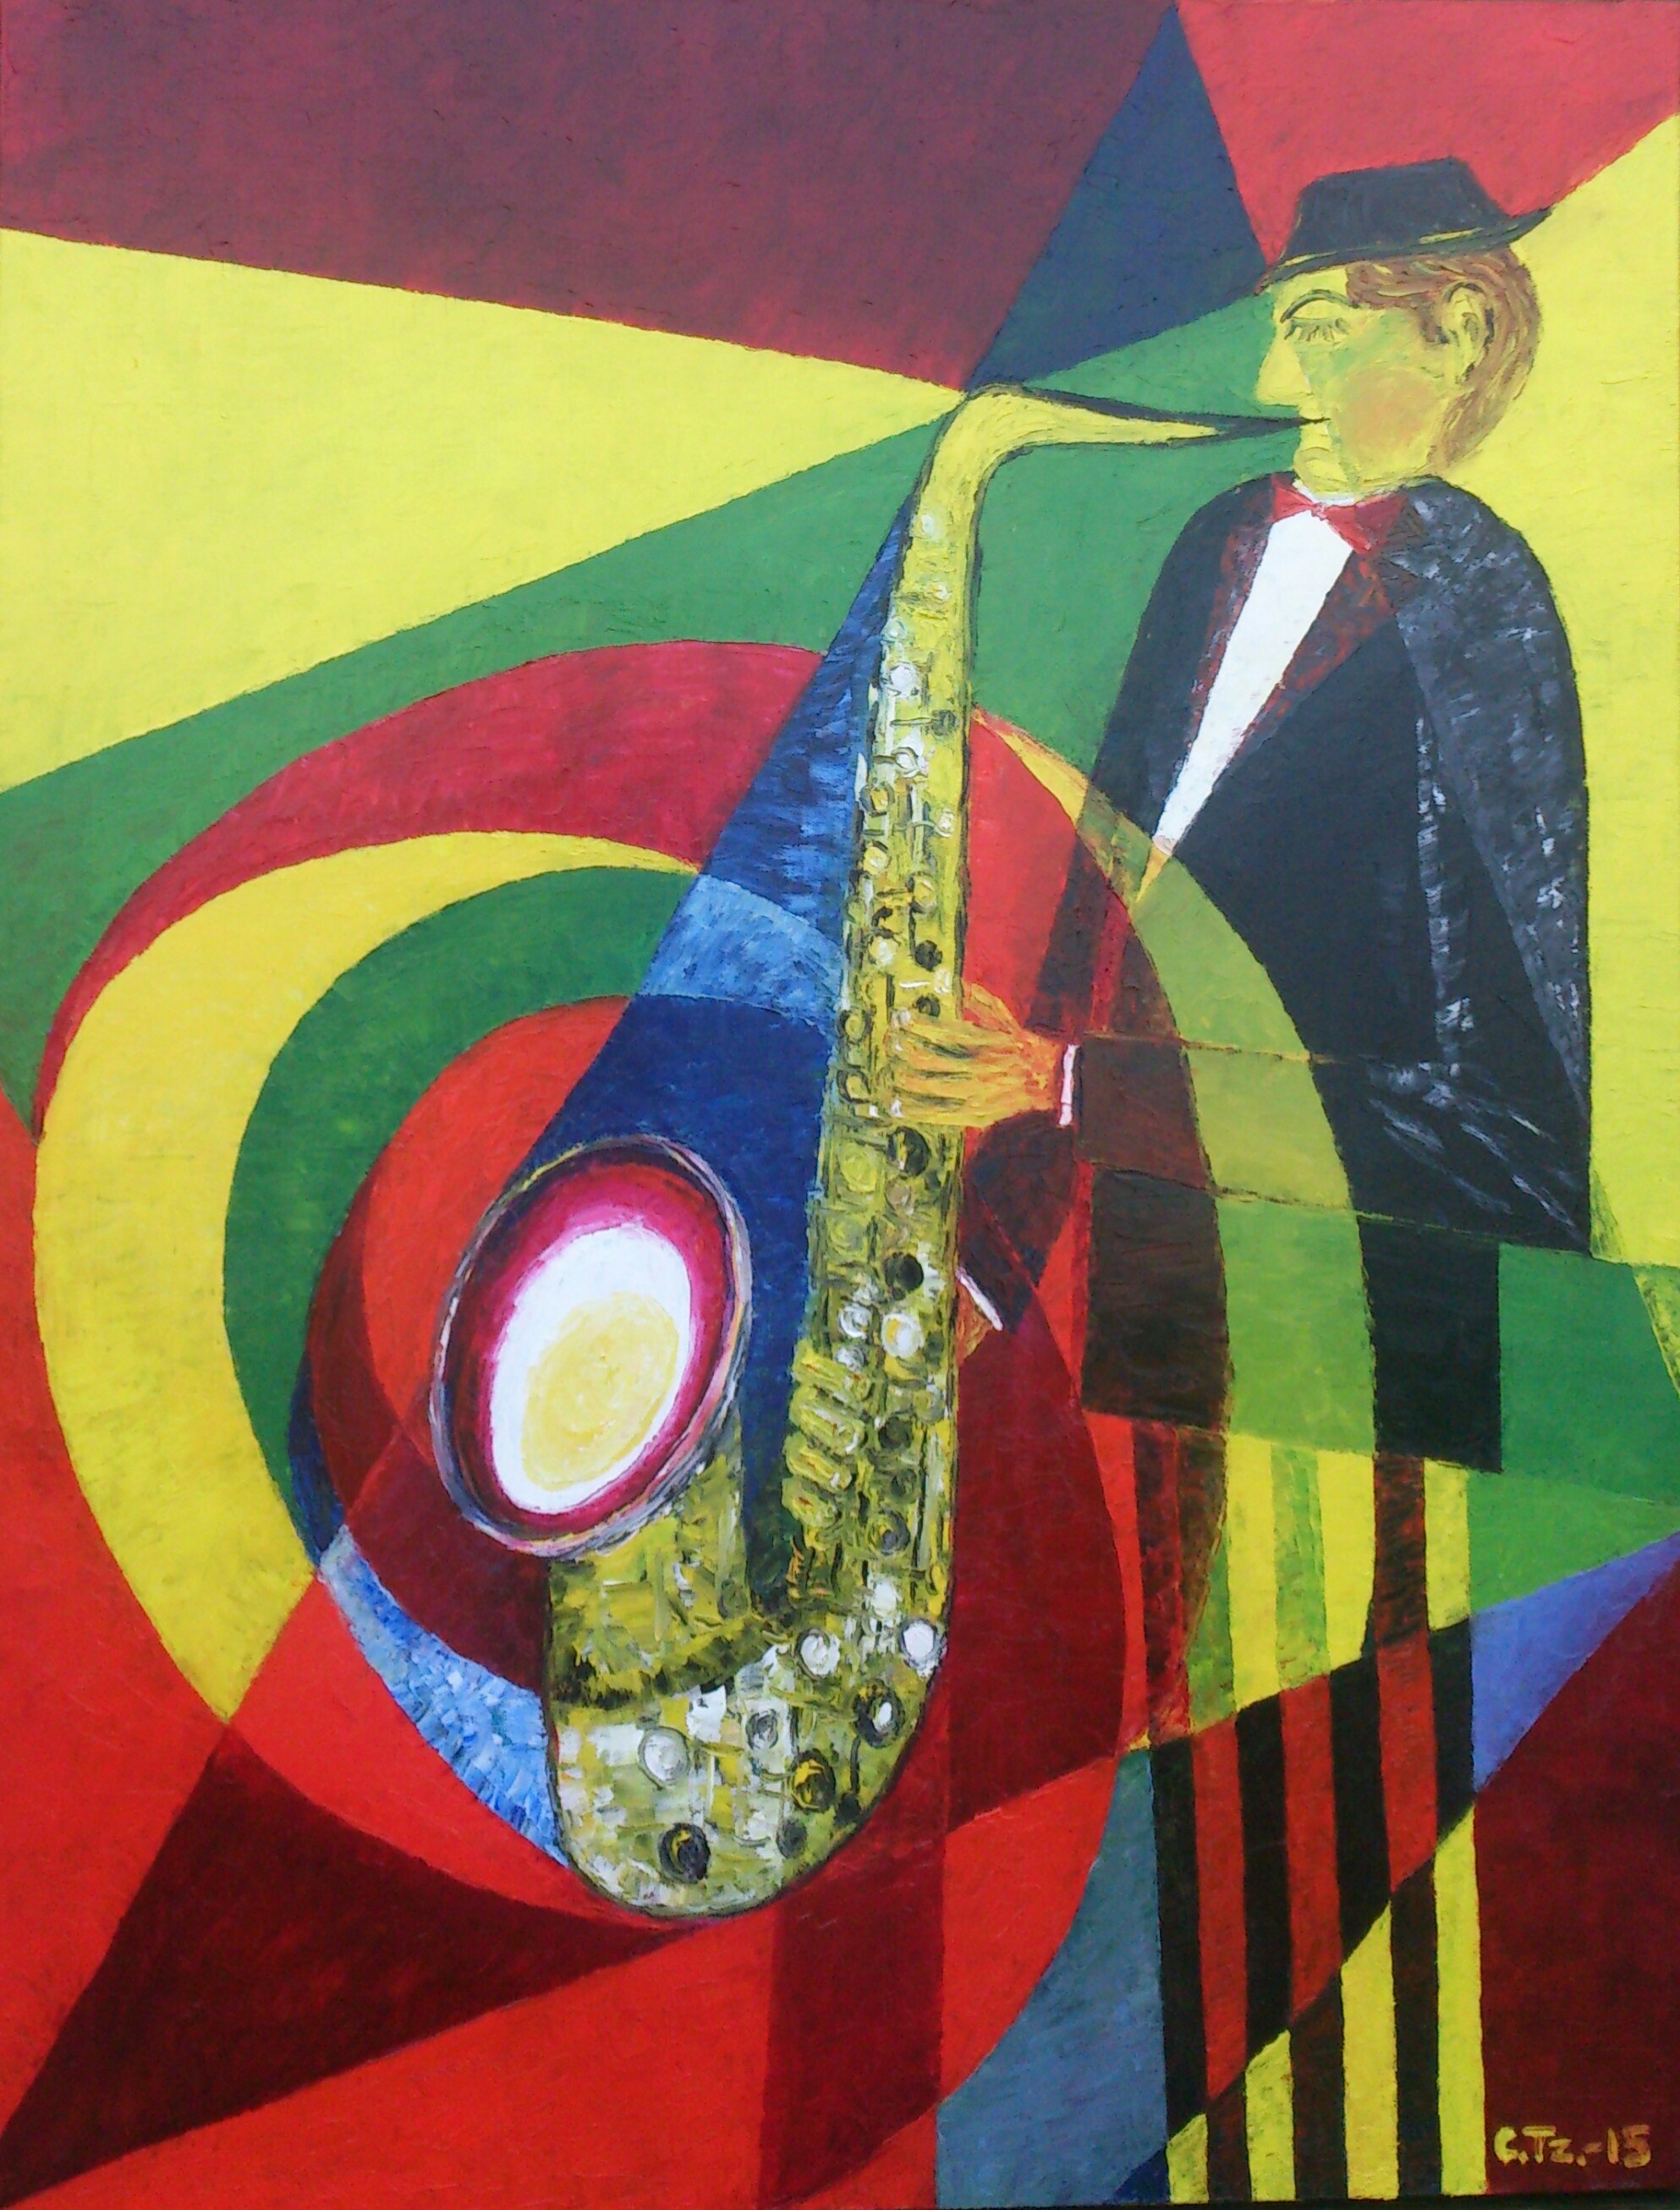 the yellow saxophone